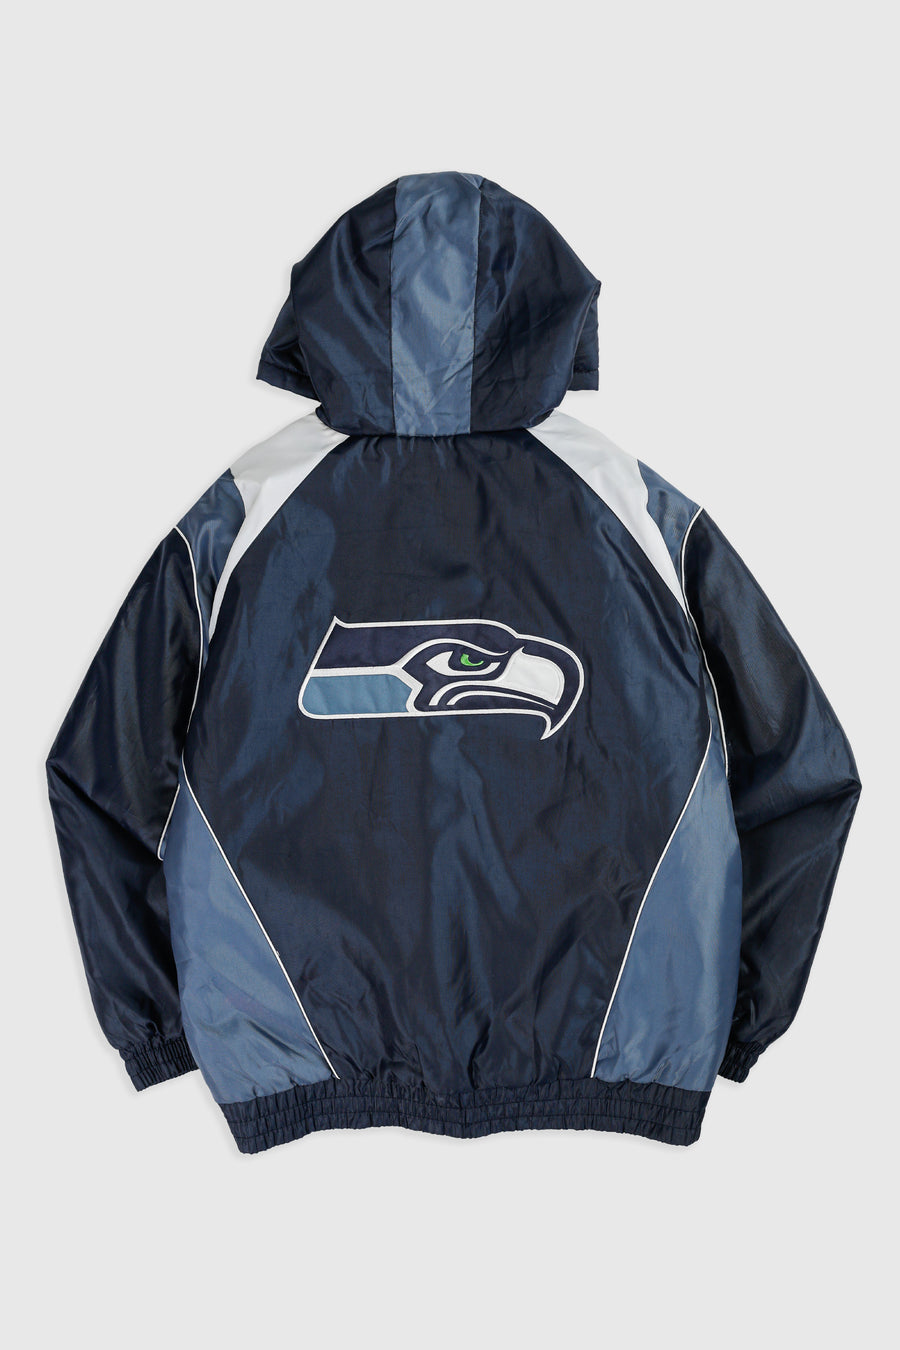 Vintage Seattle Seahawks NFL Puffer Jacket - XL